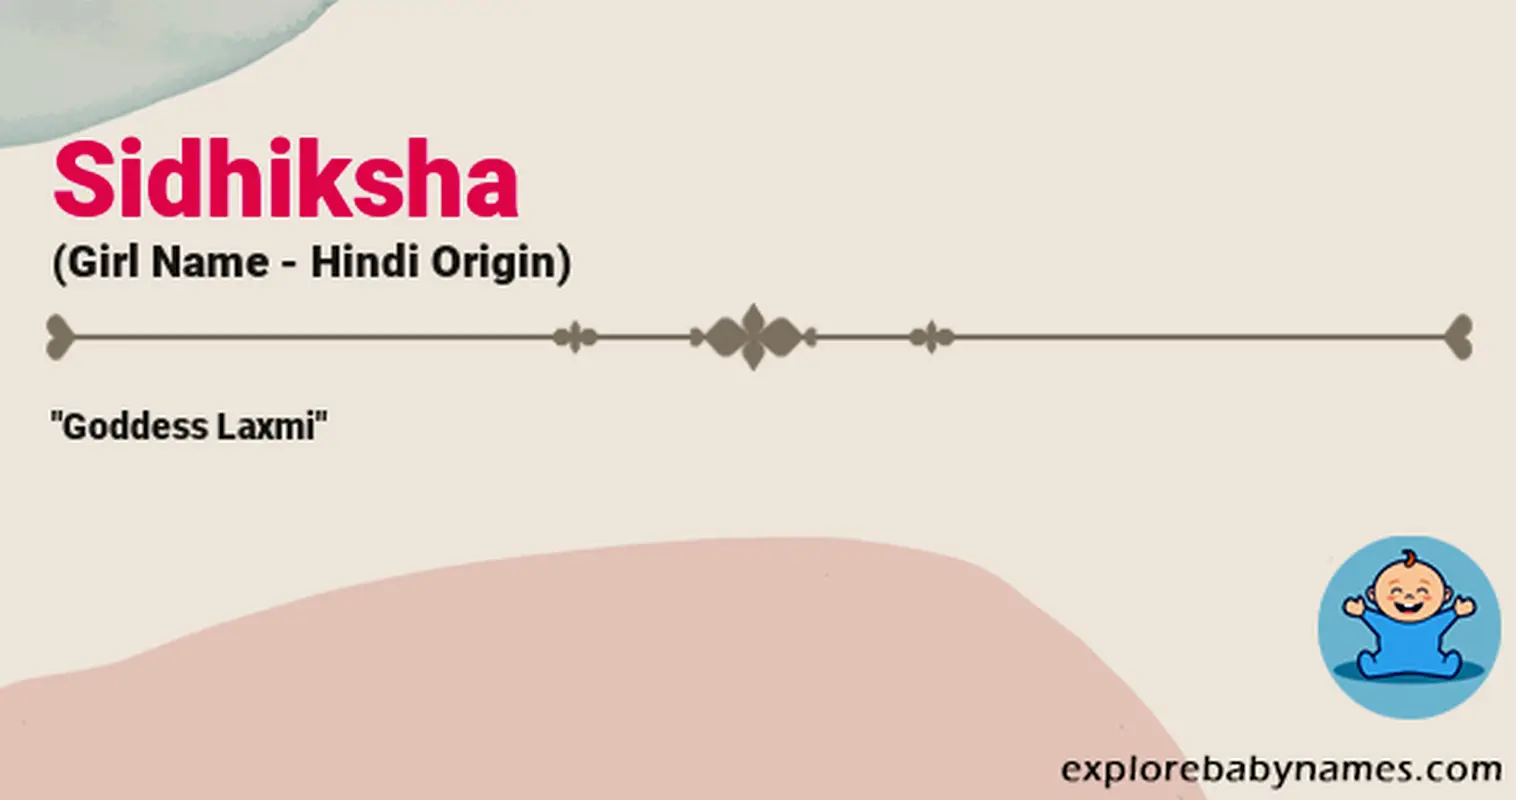 Meaning of Sidhiksha